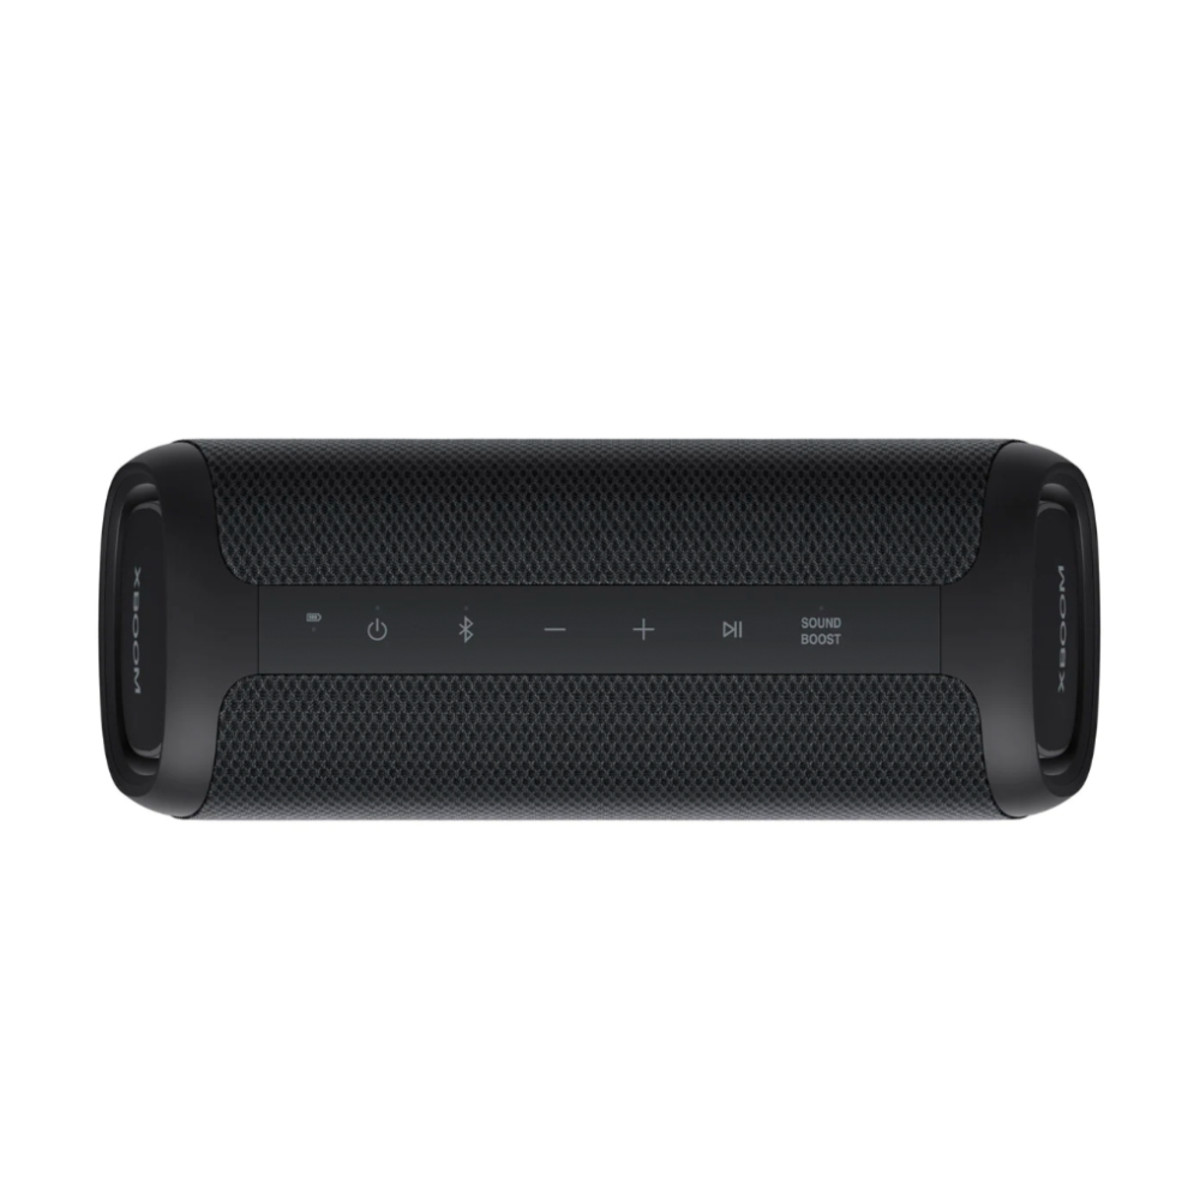 XBOOMGo XG7 Portable Bluetooth Speaker